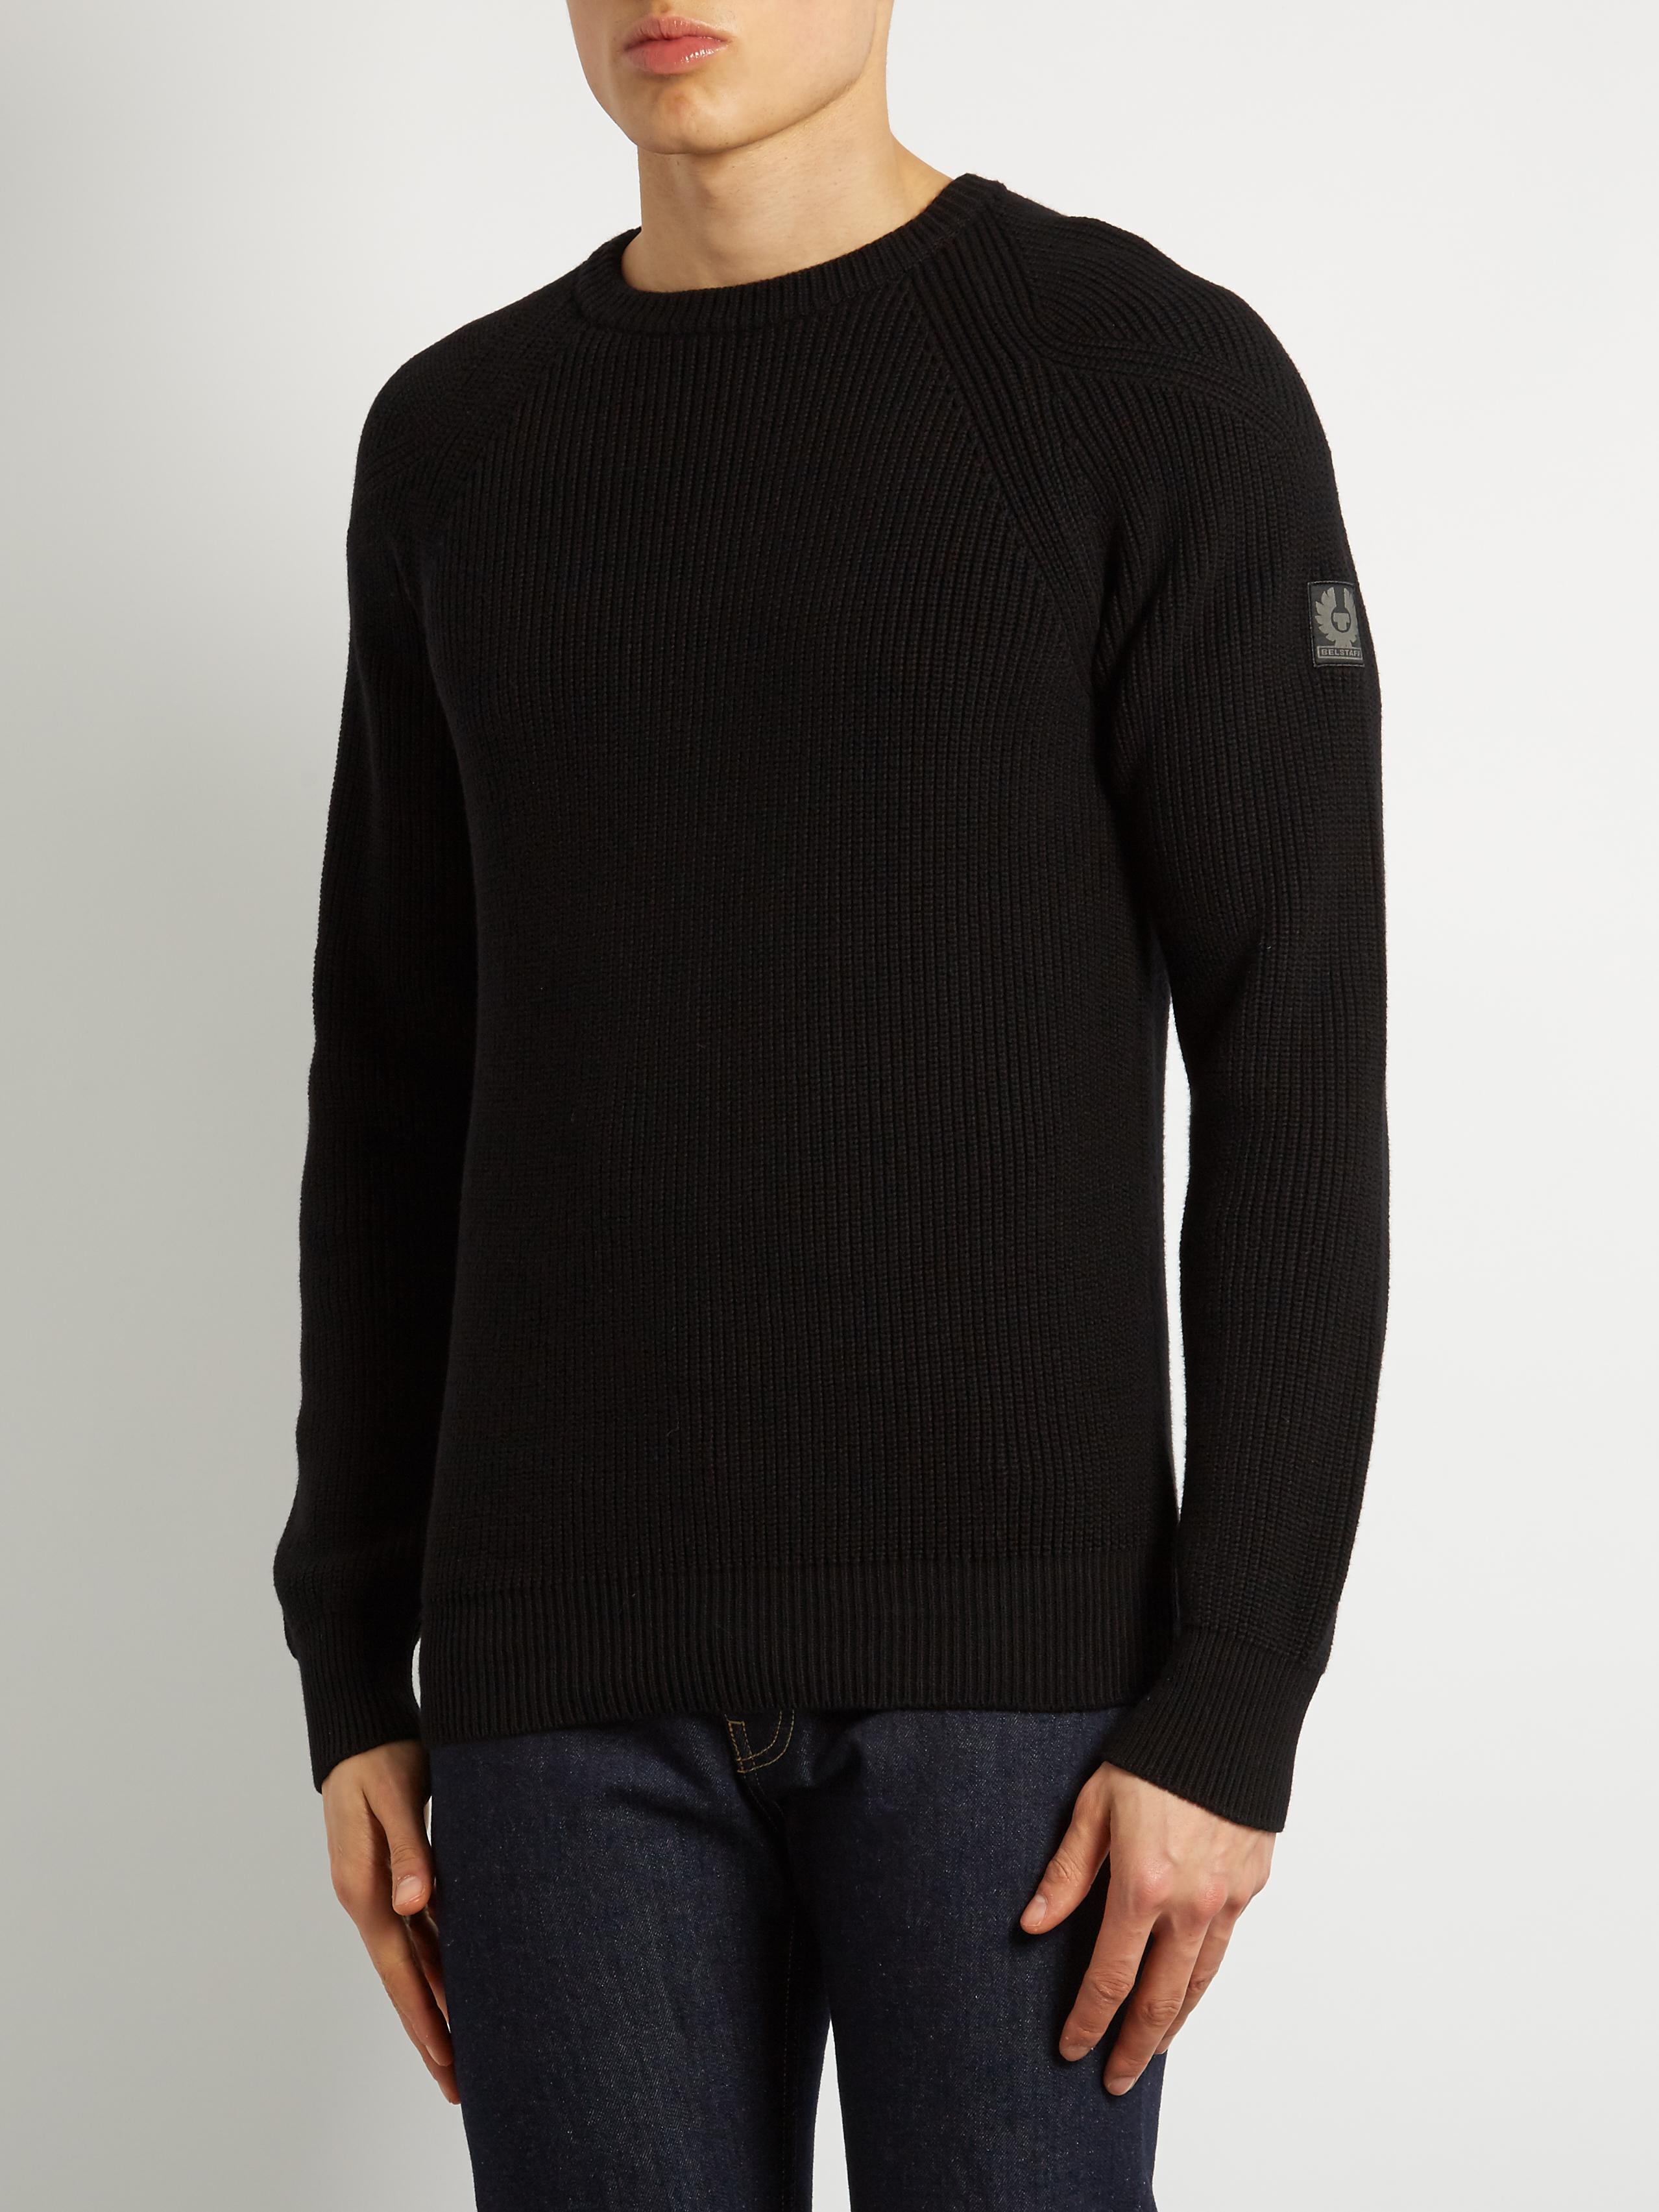 Belstaff Parkland Crew-neck Cotton Sweater in Black for Men - Lyst